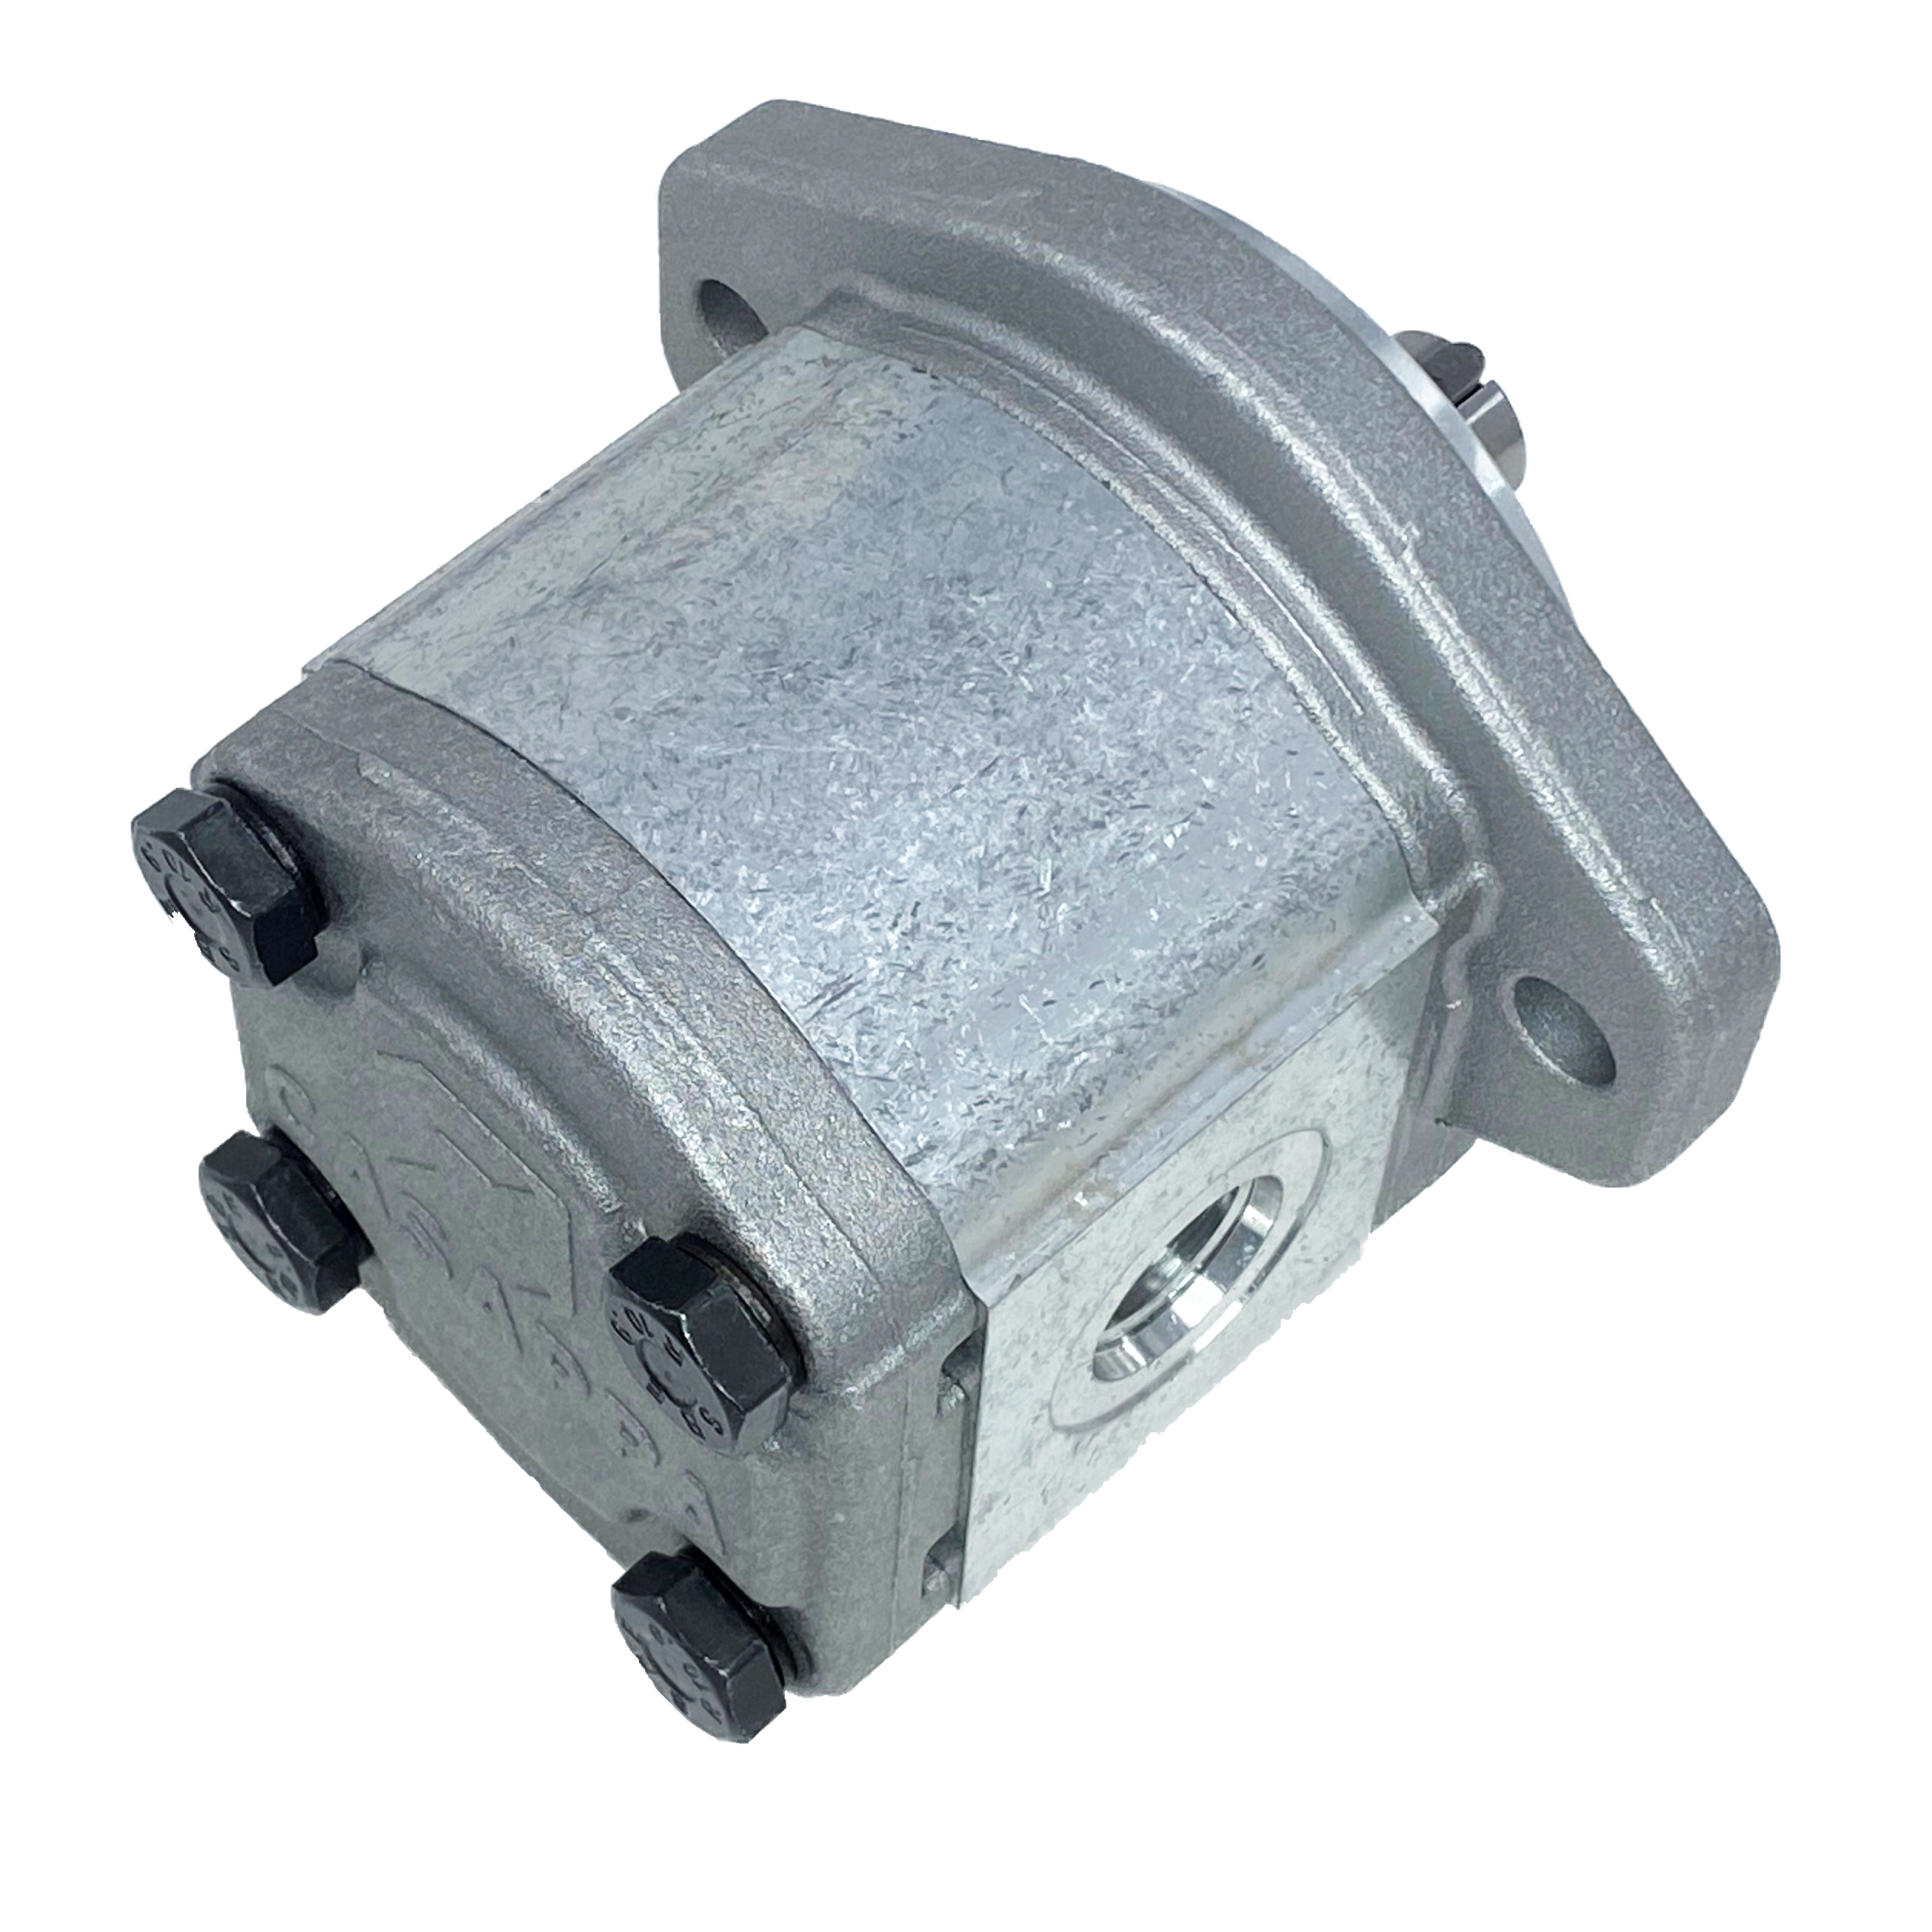 PLM20.8R0-50S1-LOC/OC-N-EL : Casappa Polaris Gear Motor, 8.26cc, 3625psi Rated, 3500RPM, Reversible Rear External Drain, 3/4" Bore x 3/16" Key Shaft, SAE A 2-Bolt Flange, 0.625 (5/8") #10 SAE Inlet, 0.625 (5/8") #10 SAE Outlet, Aluminum Body & Flange